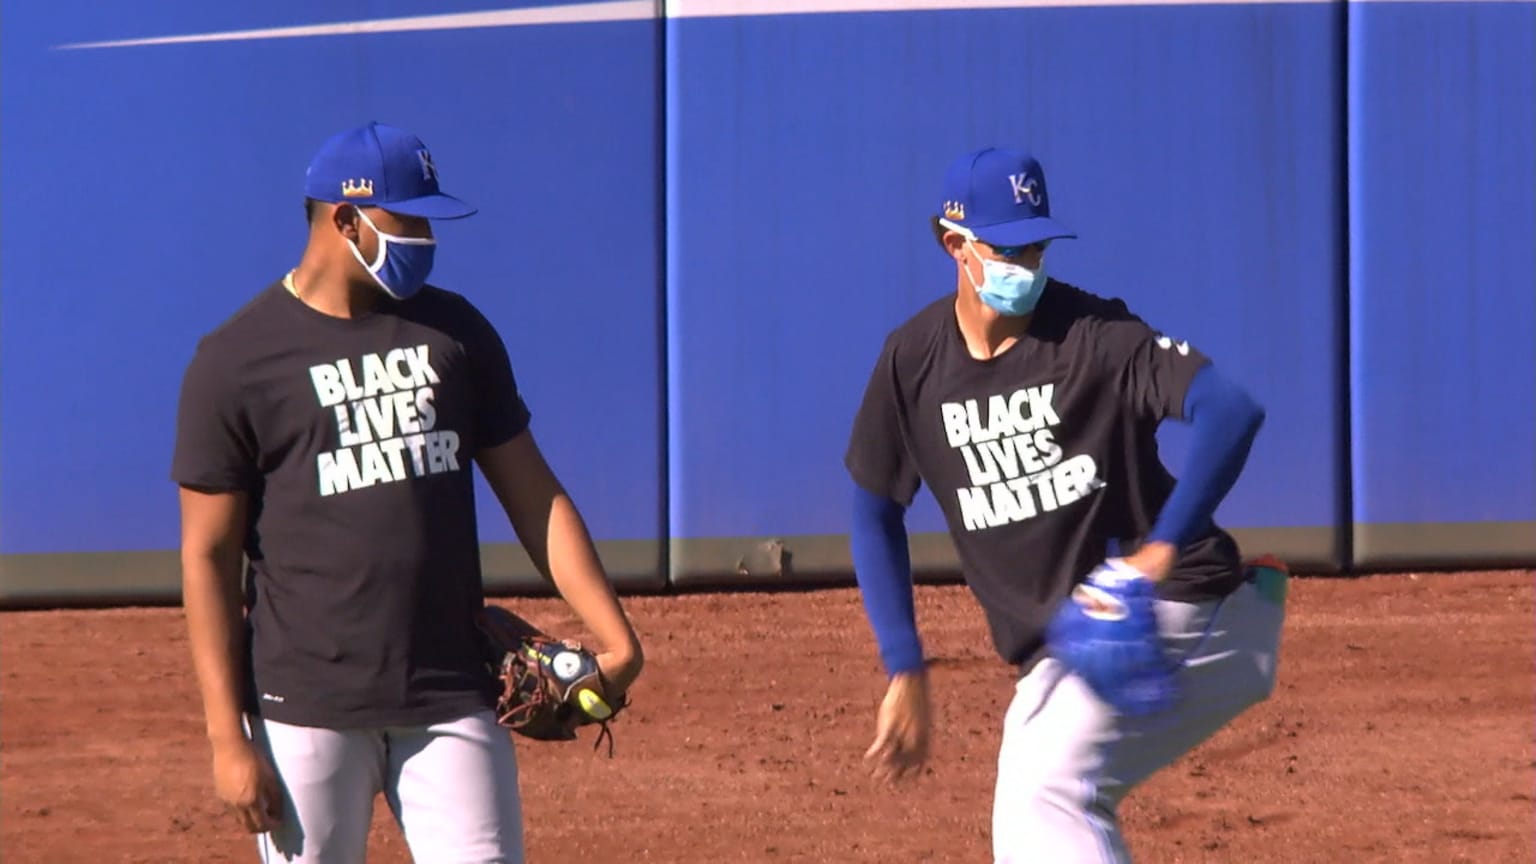 Black Lives Matter: NY Mets, Atlanta Braves wear shirts before game